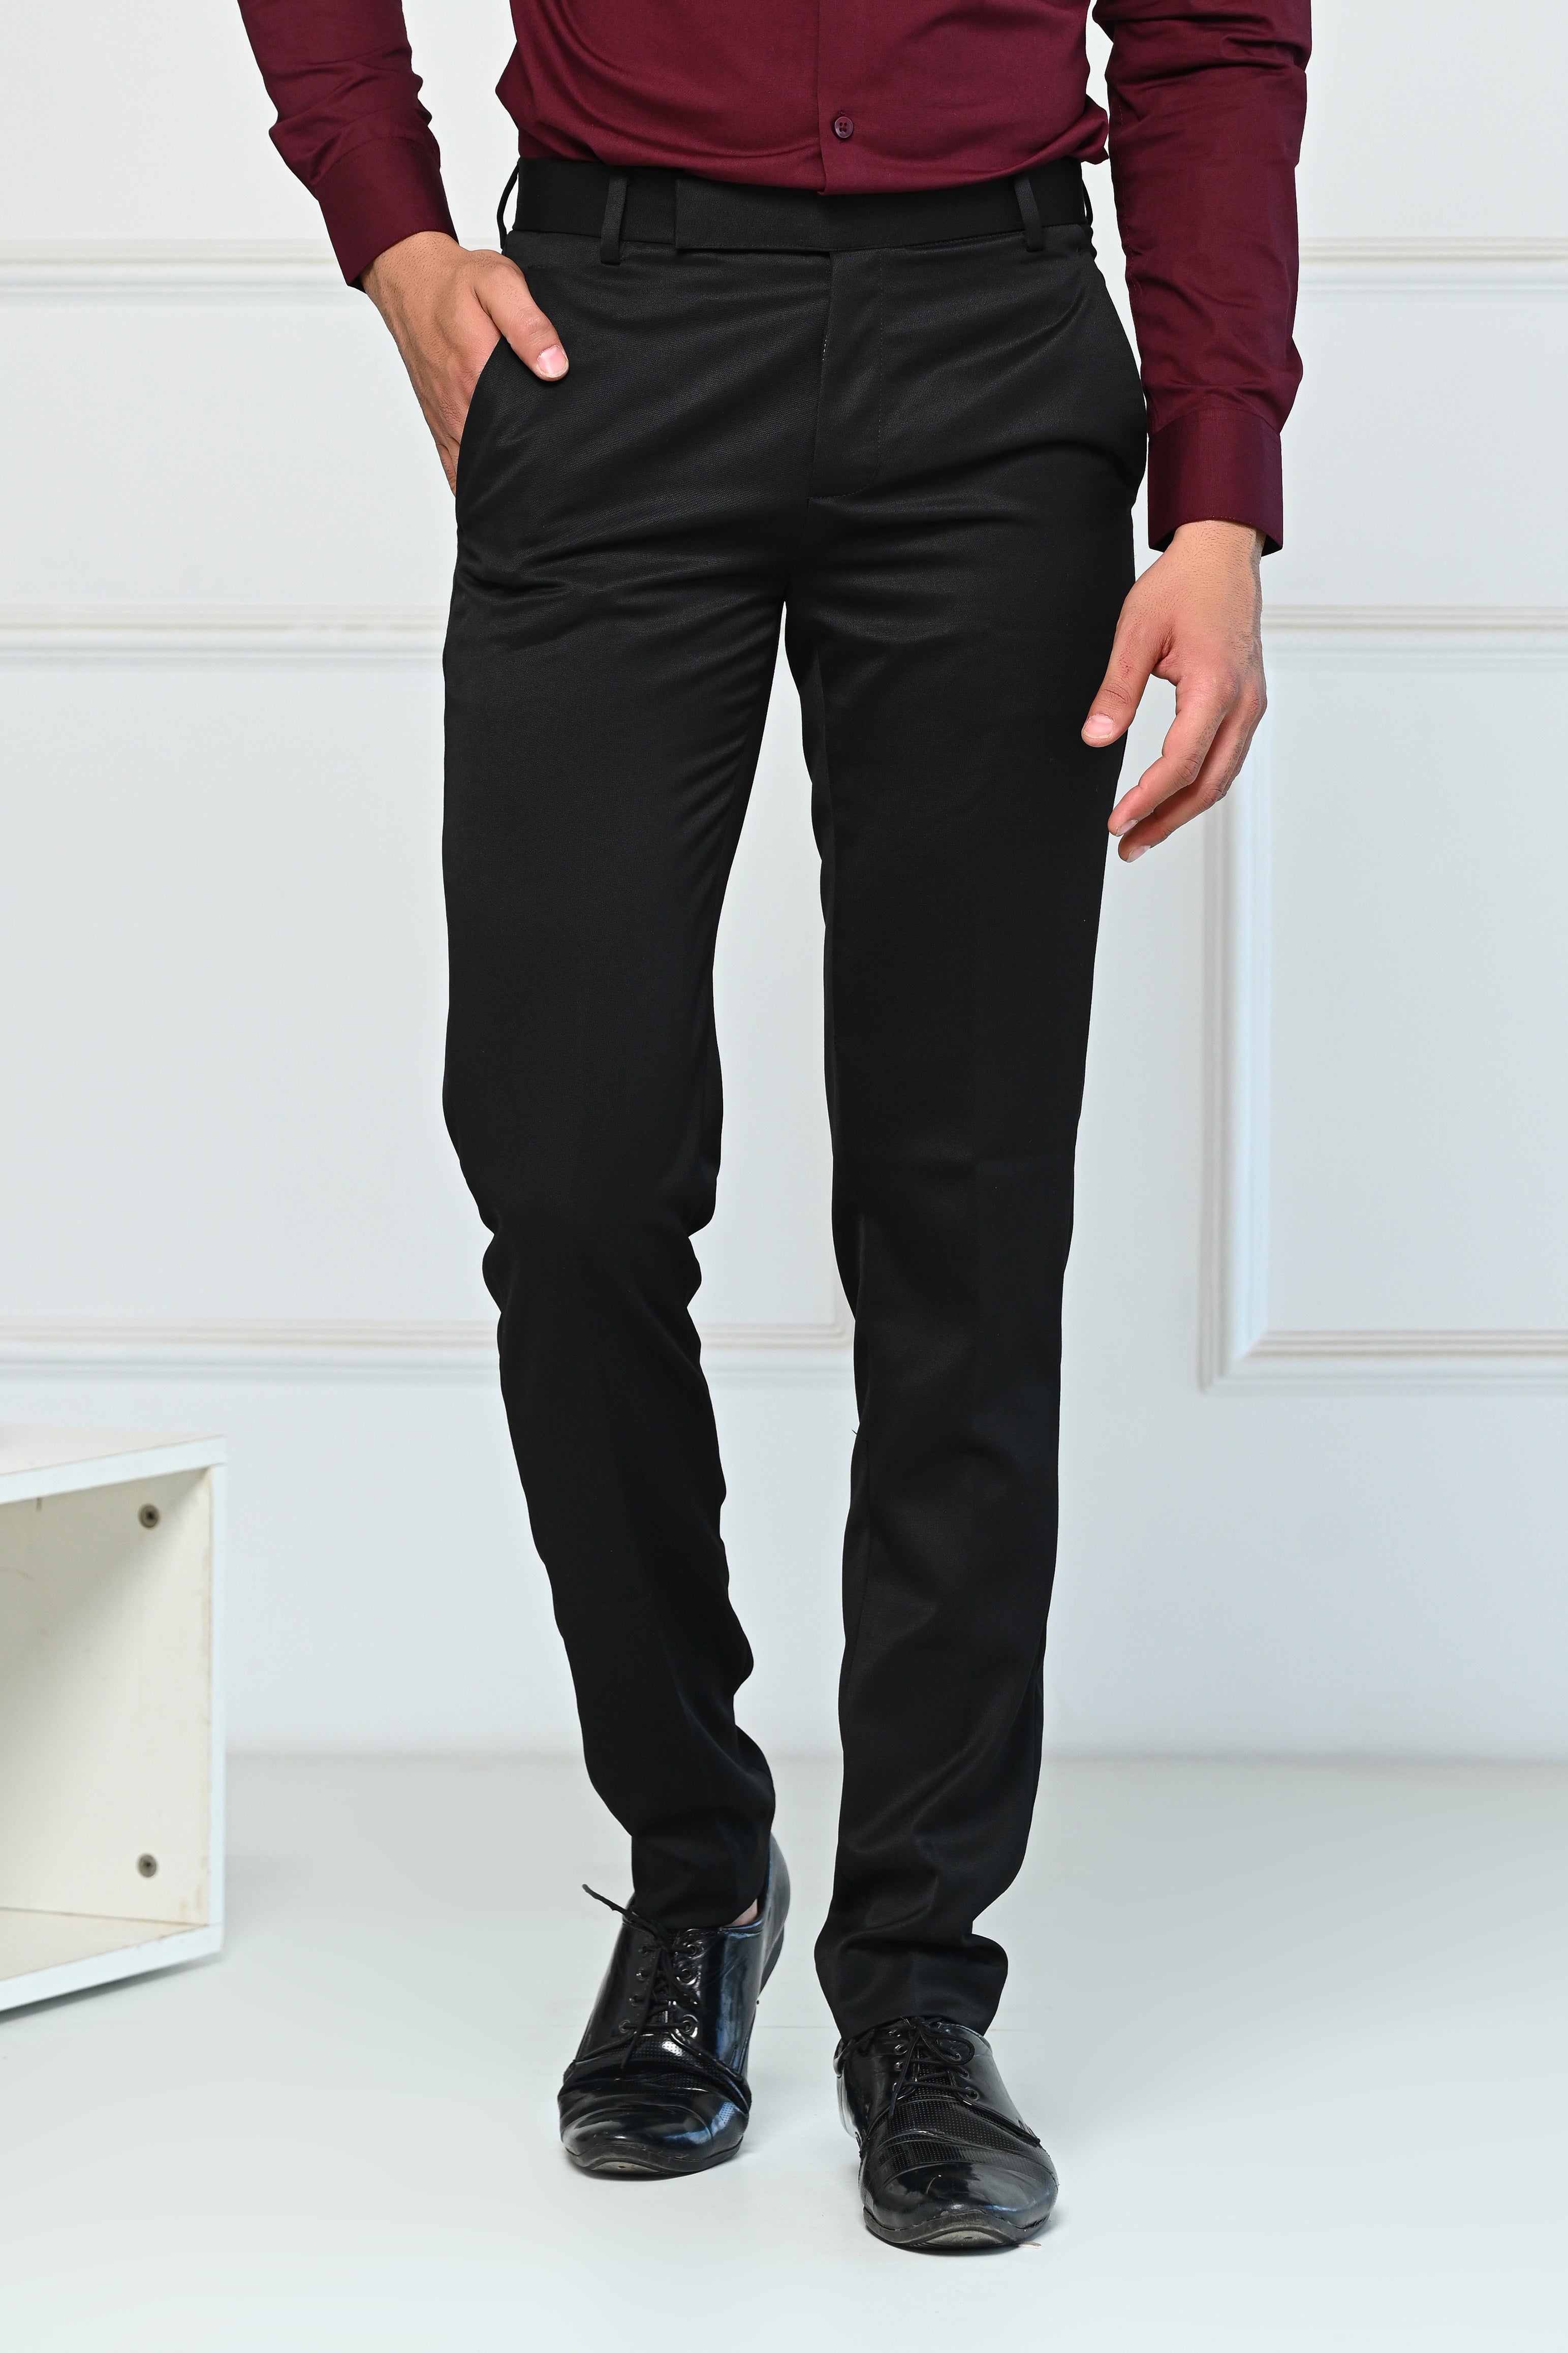 Black Velvet Trouser Suits for Women Pakistan Buy Semi Formal Trouser Suits